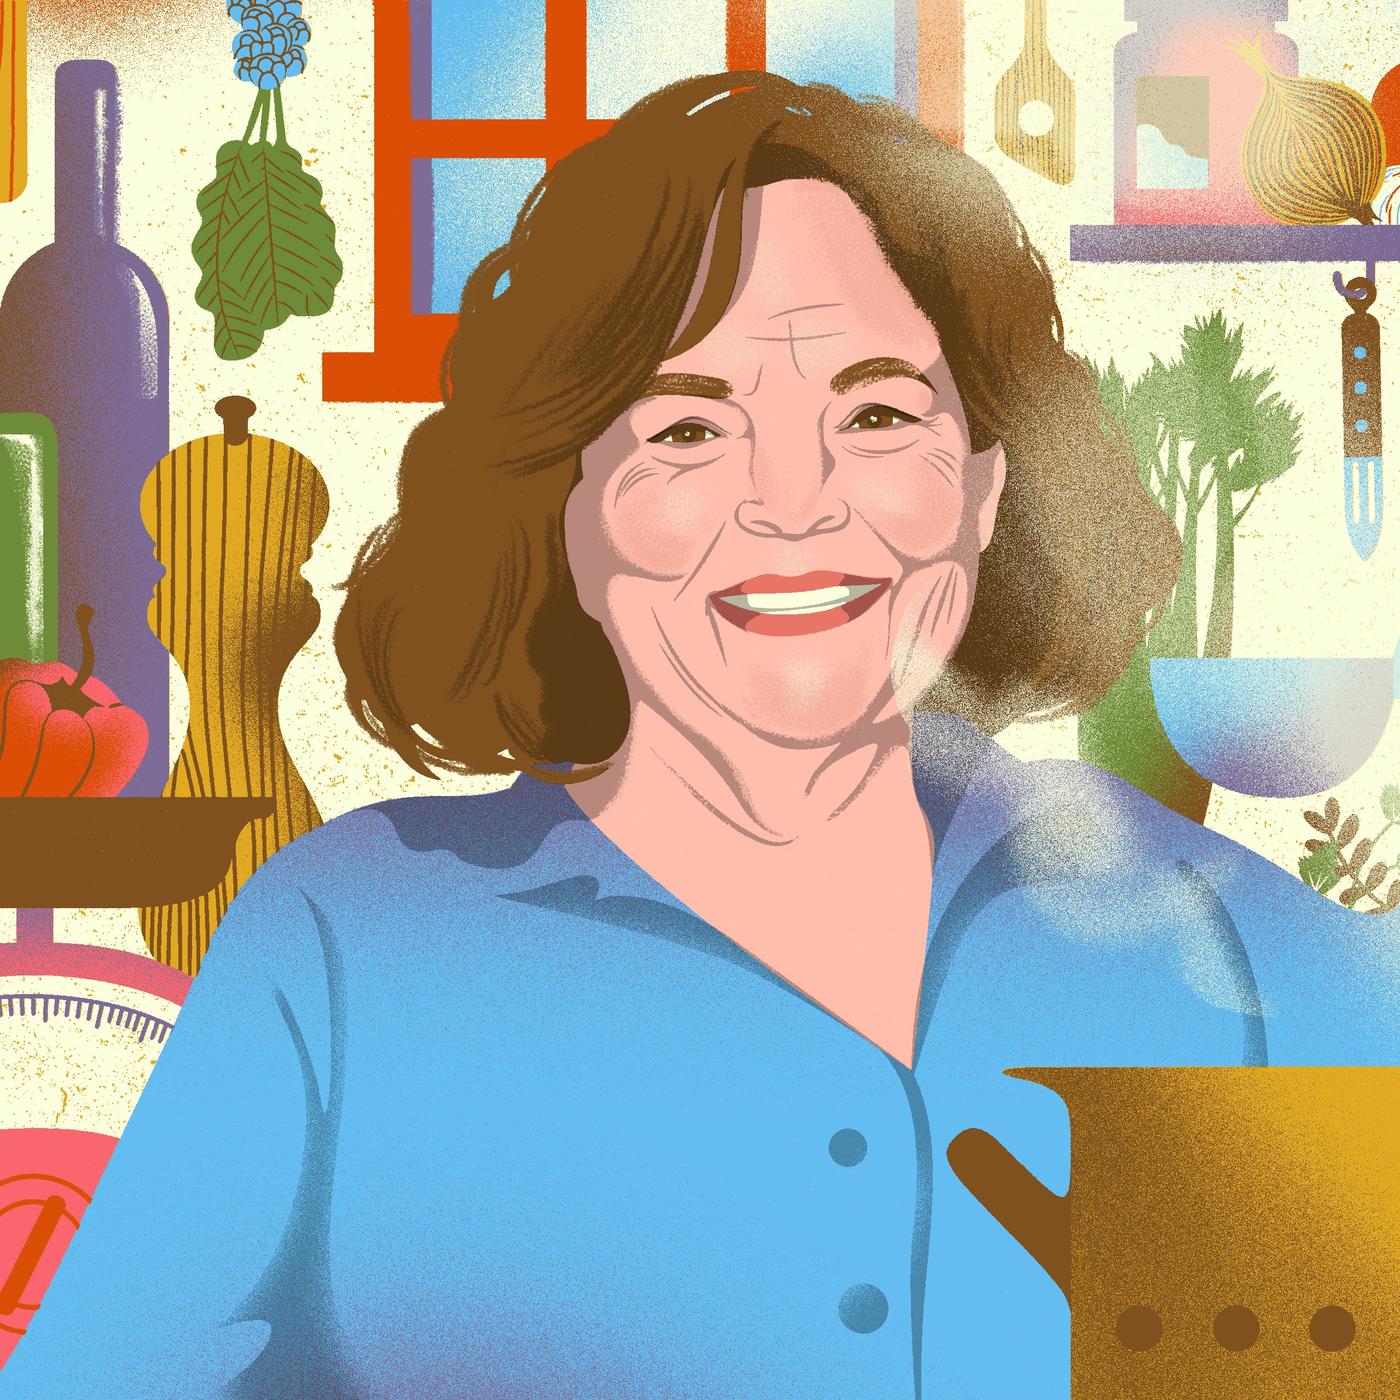 Ina Garten: Cooking Is Hard; Plus an Essay from Susan Orlean